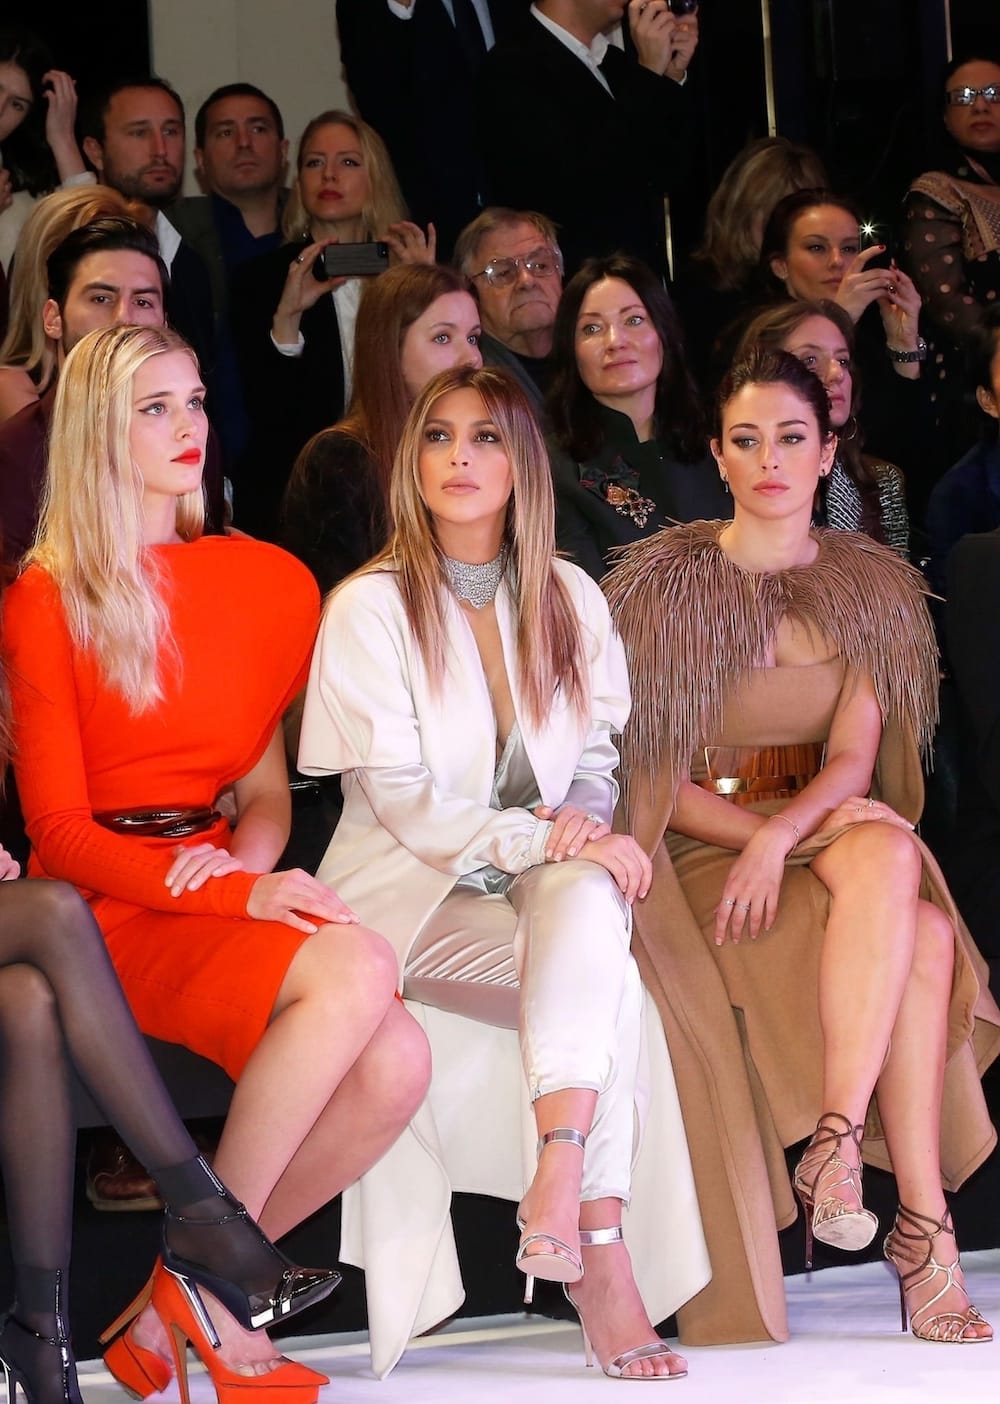 Kim Kardashian Sizzles in Stephane Rolland Jumpsuit at 2014 Paris Fashion Show